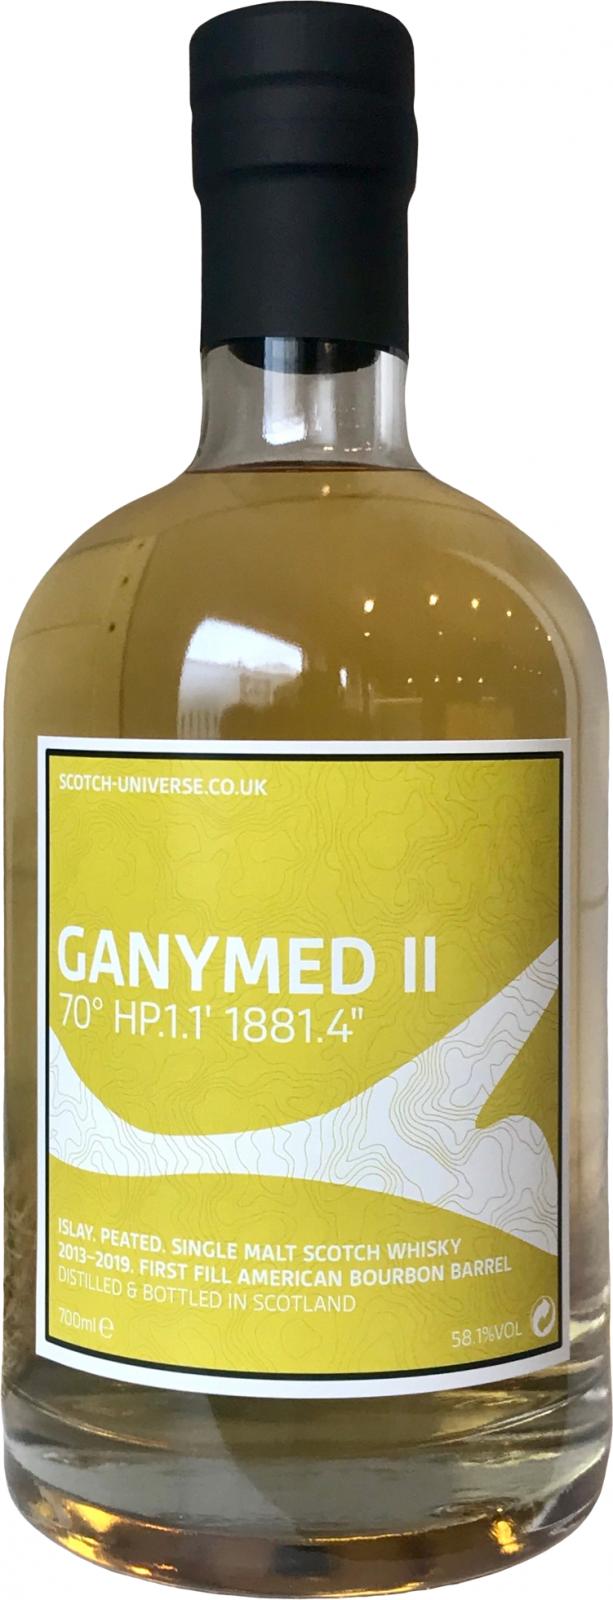 Scotch Universe Ganymed II - 70° HP.1.1&#x27; 1881.4&quot;